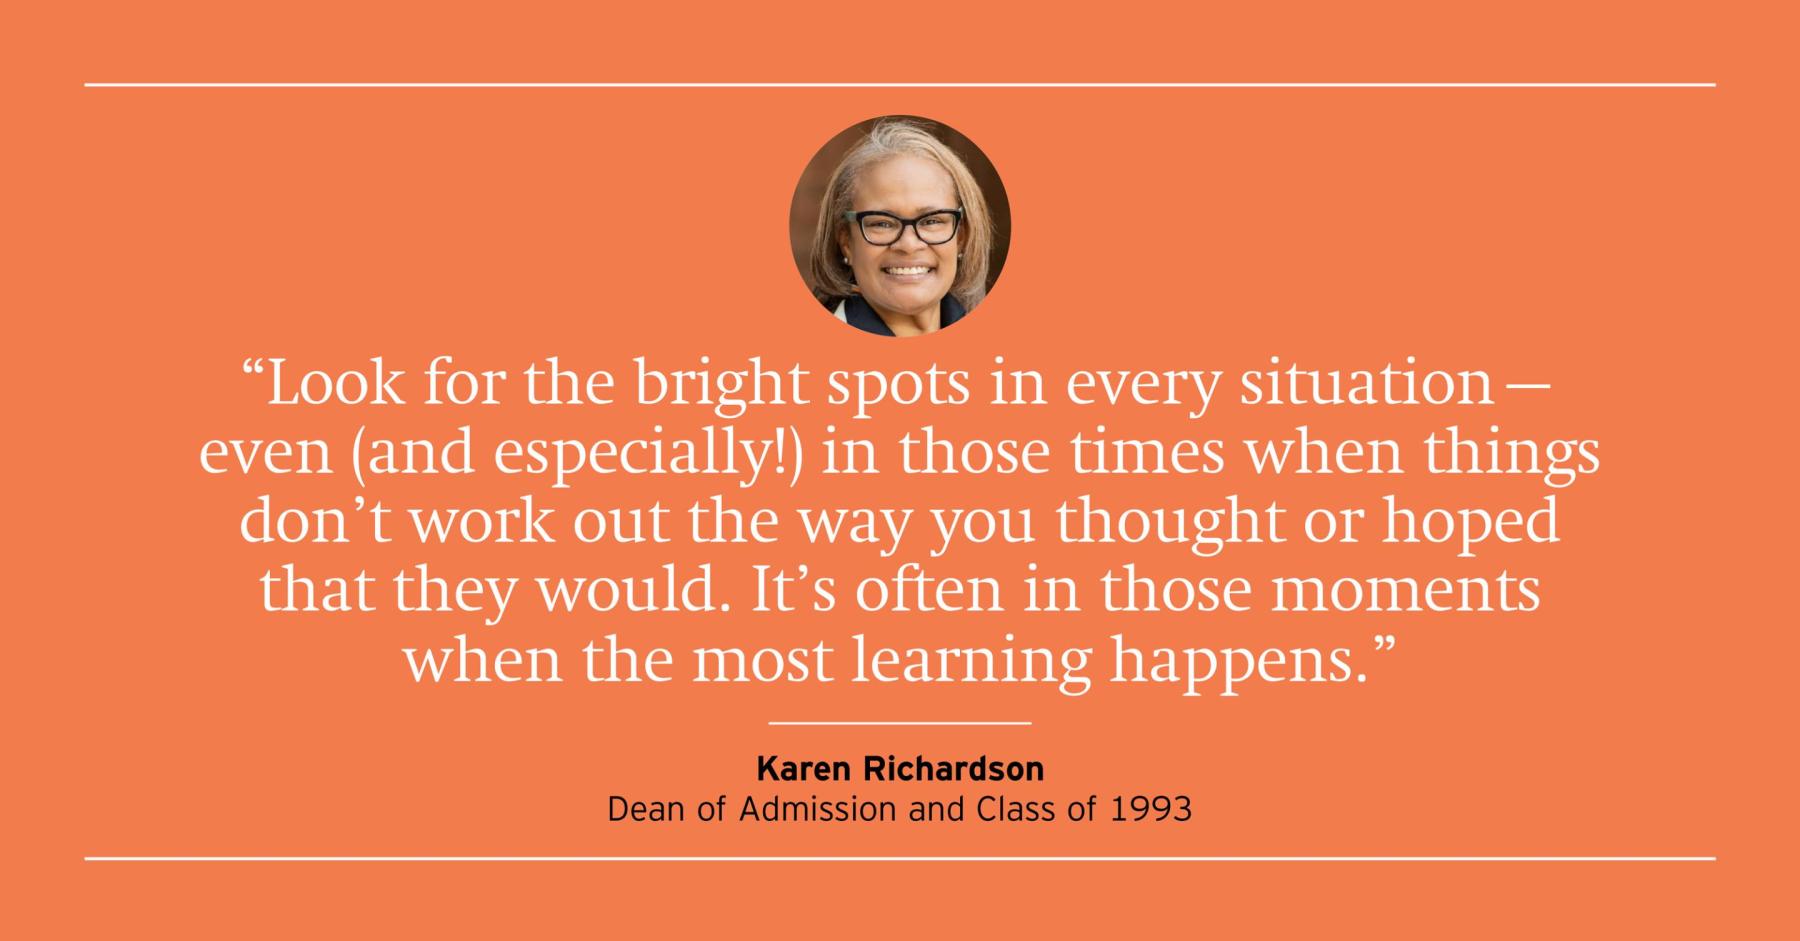 Karen Richardson photo and quote